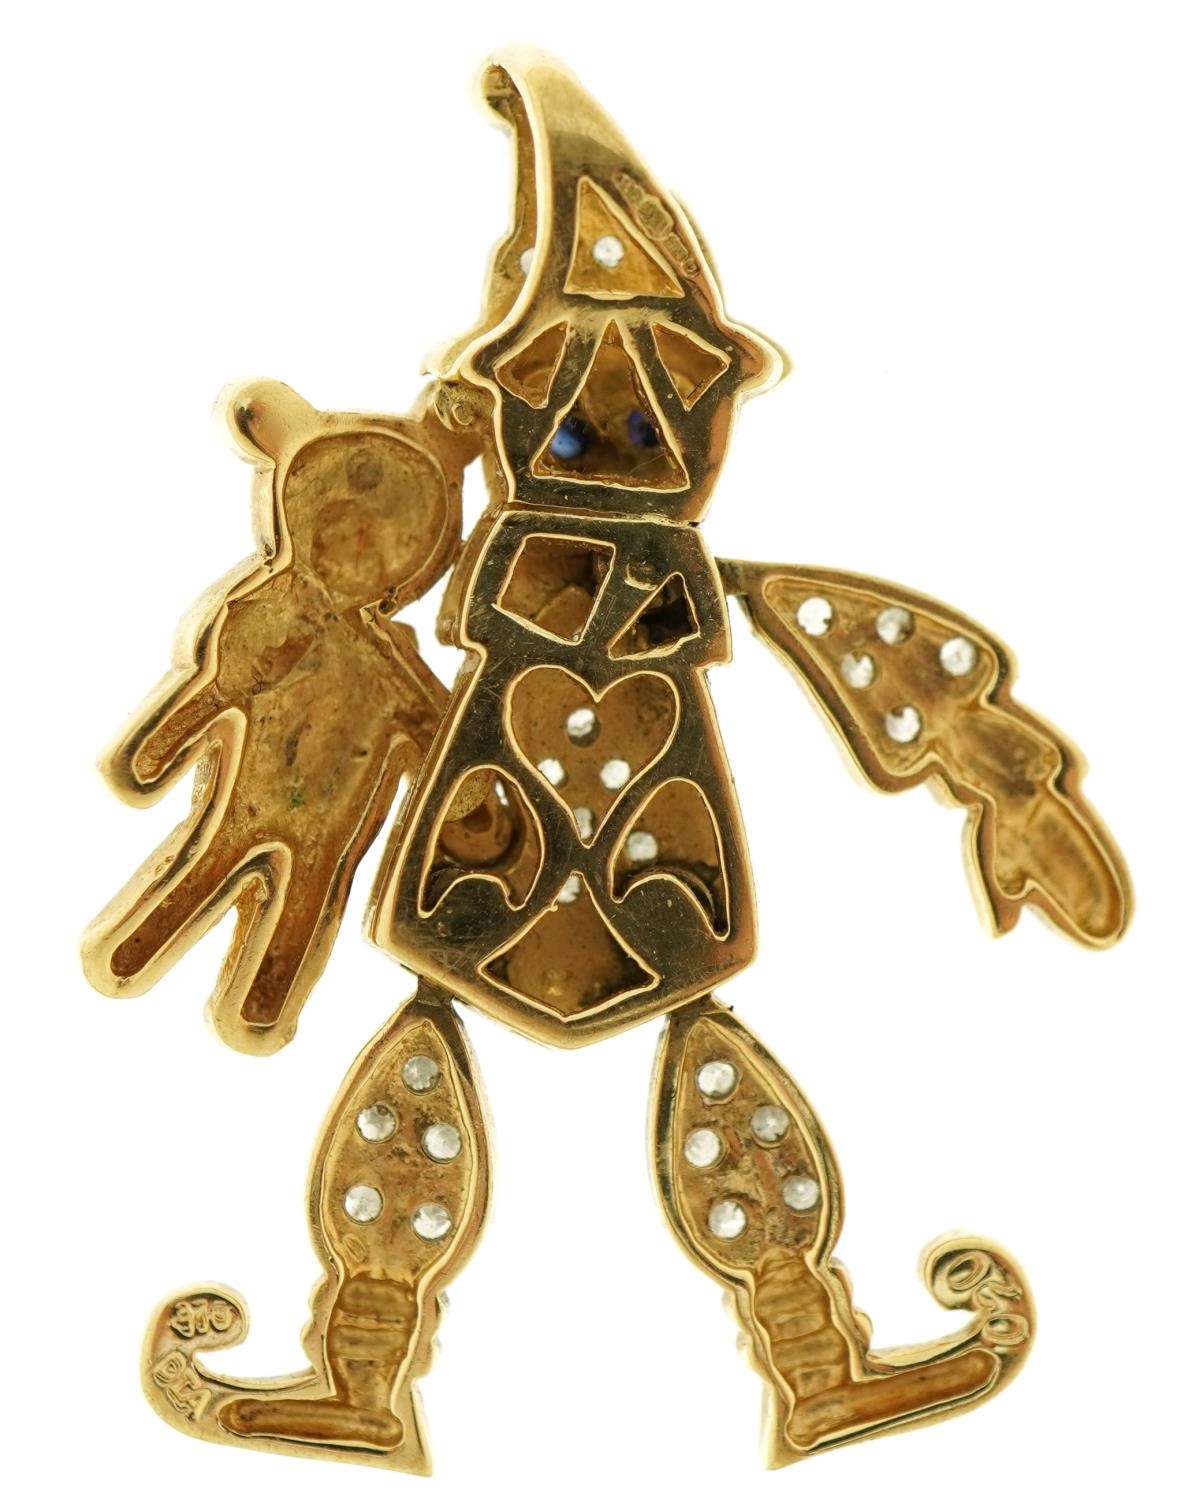 9ct gold diamond clown pendant with sapphire eyes, 3.3cm high, 4.4g - Image 2 of 3